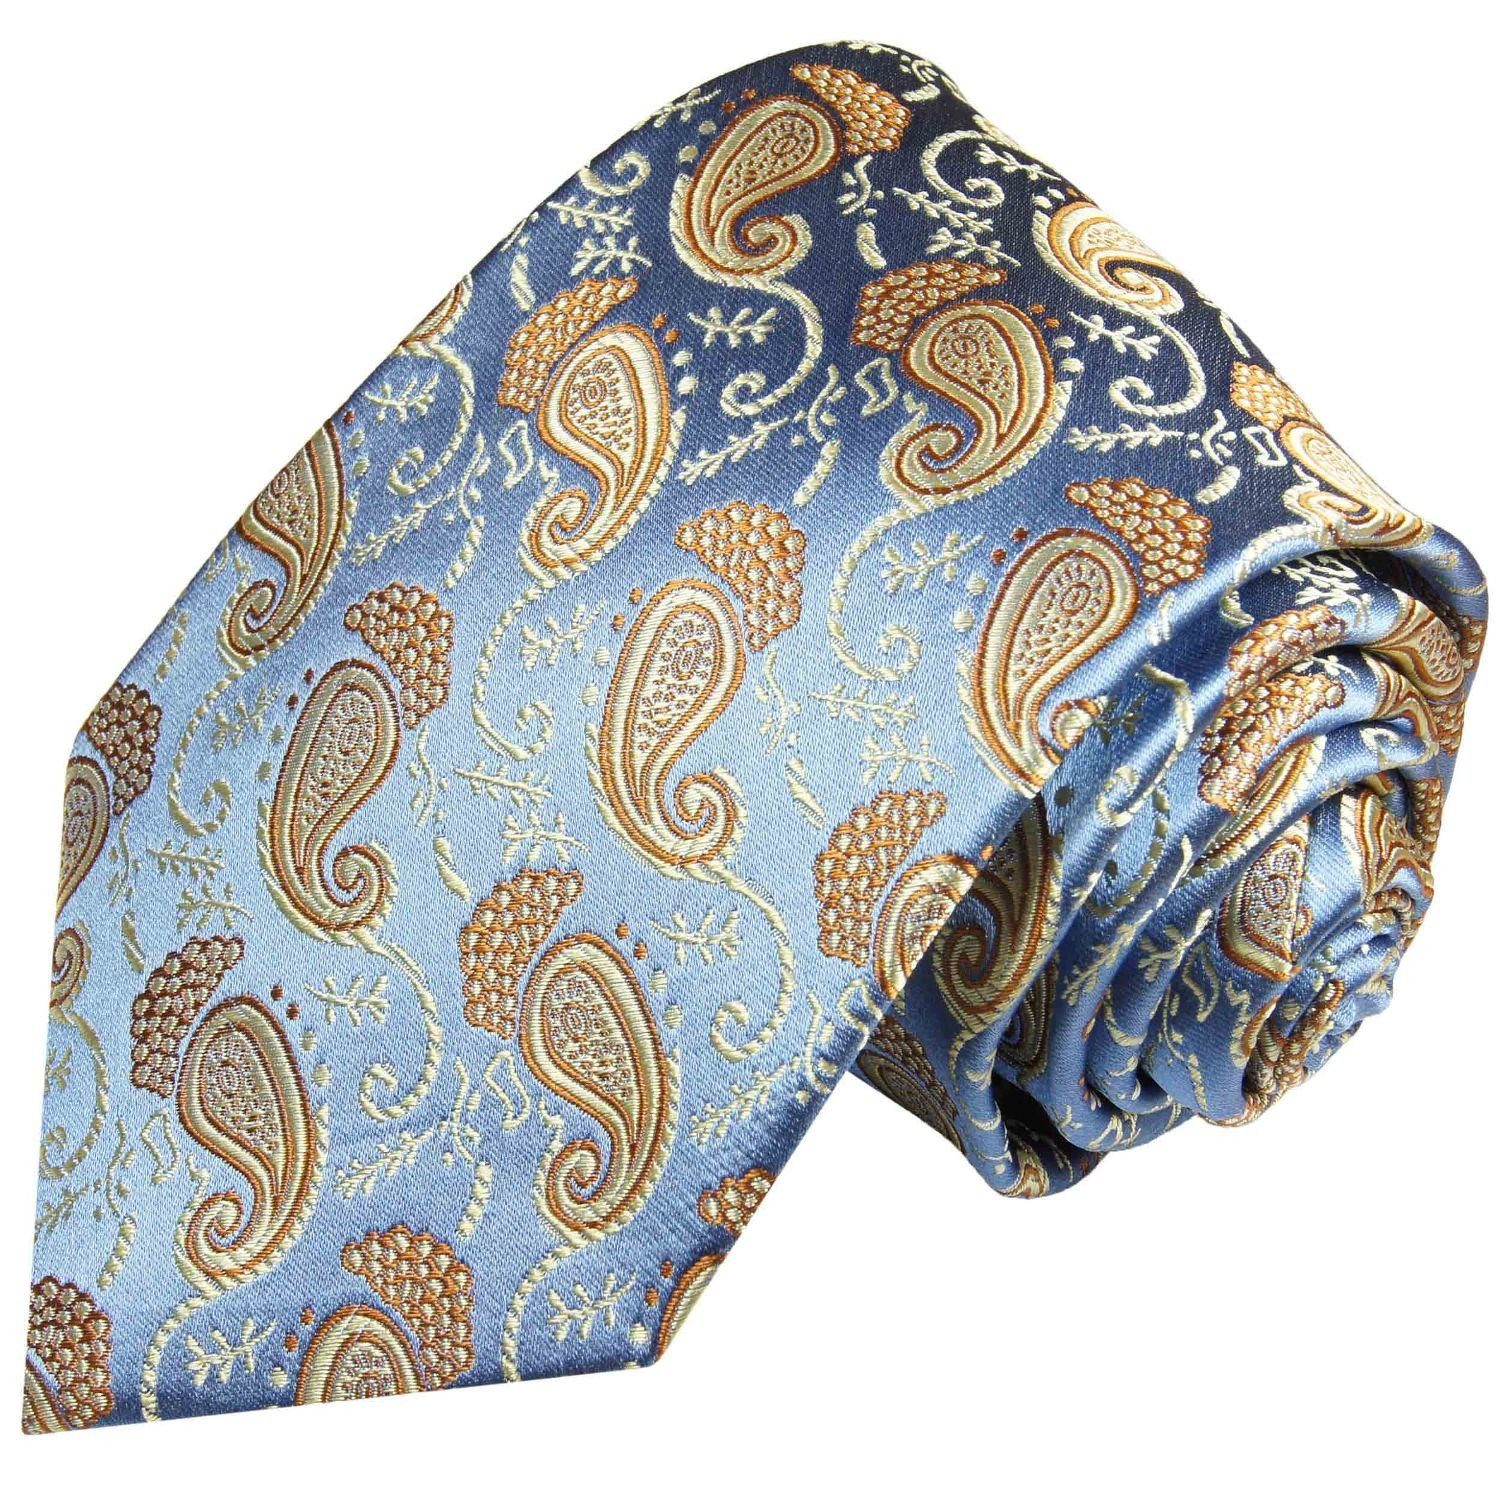 Paul Malone Krawatte Elegante Seidenkrawatte Herren Schlips paisley brokat 100% Seide Breit (8cm), blau gold 351 | Breite Krawatten